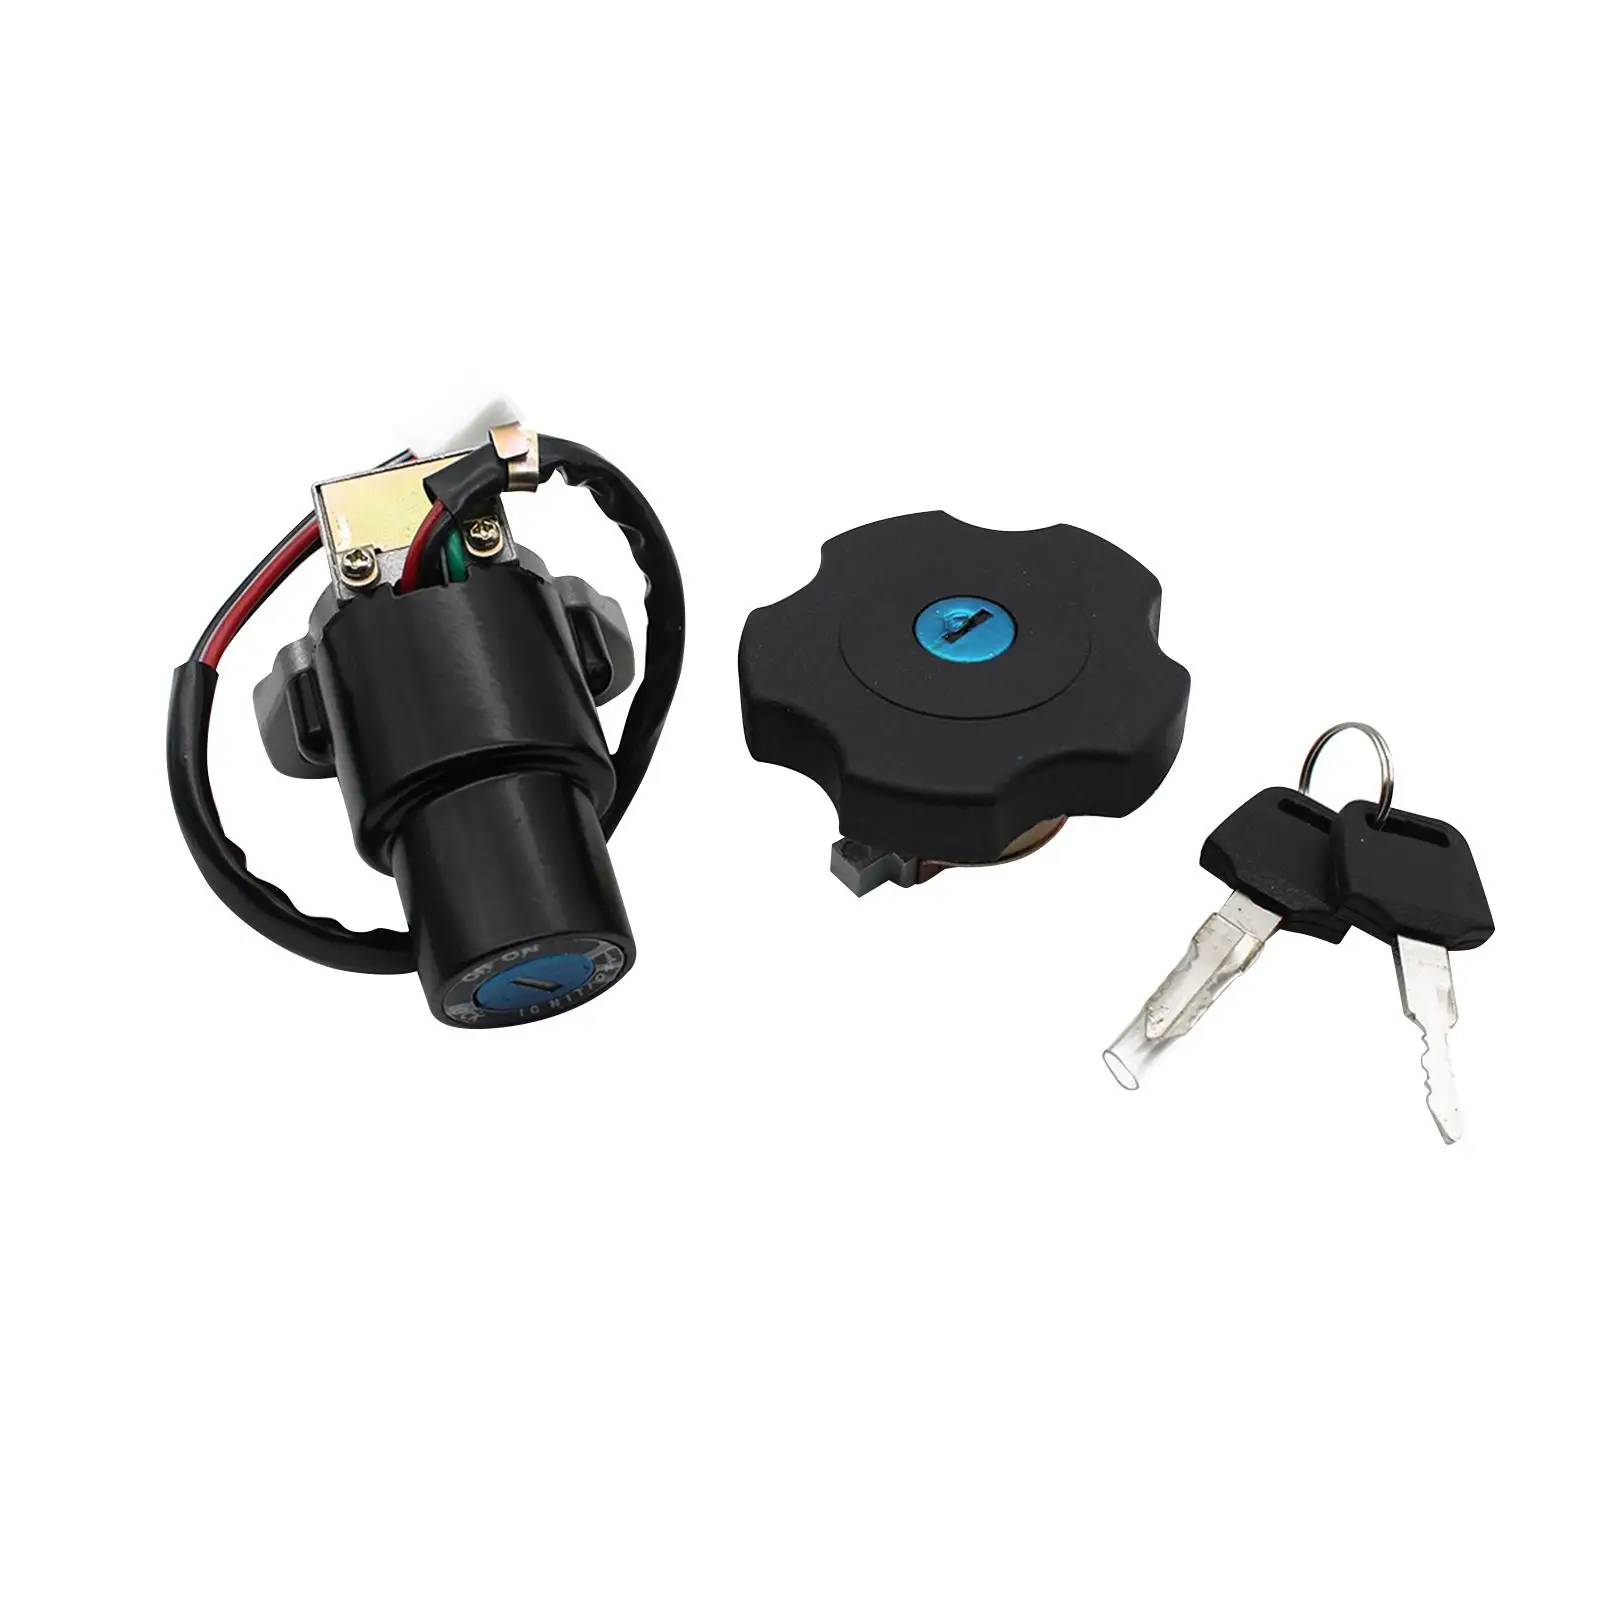 Lgnition Switch Seat Key lock Fuel Tank Cover Seat lock XT225 Serow 225 Accessories High Performance